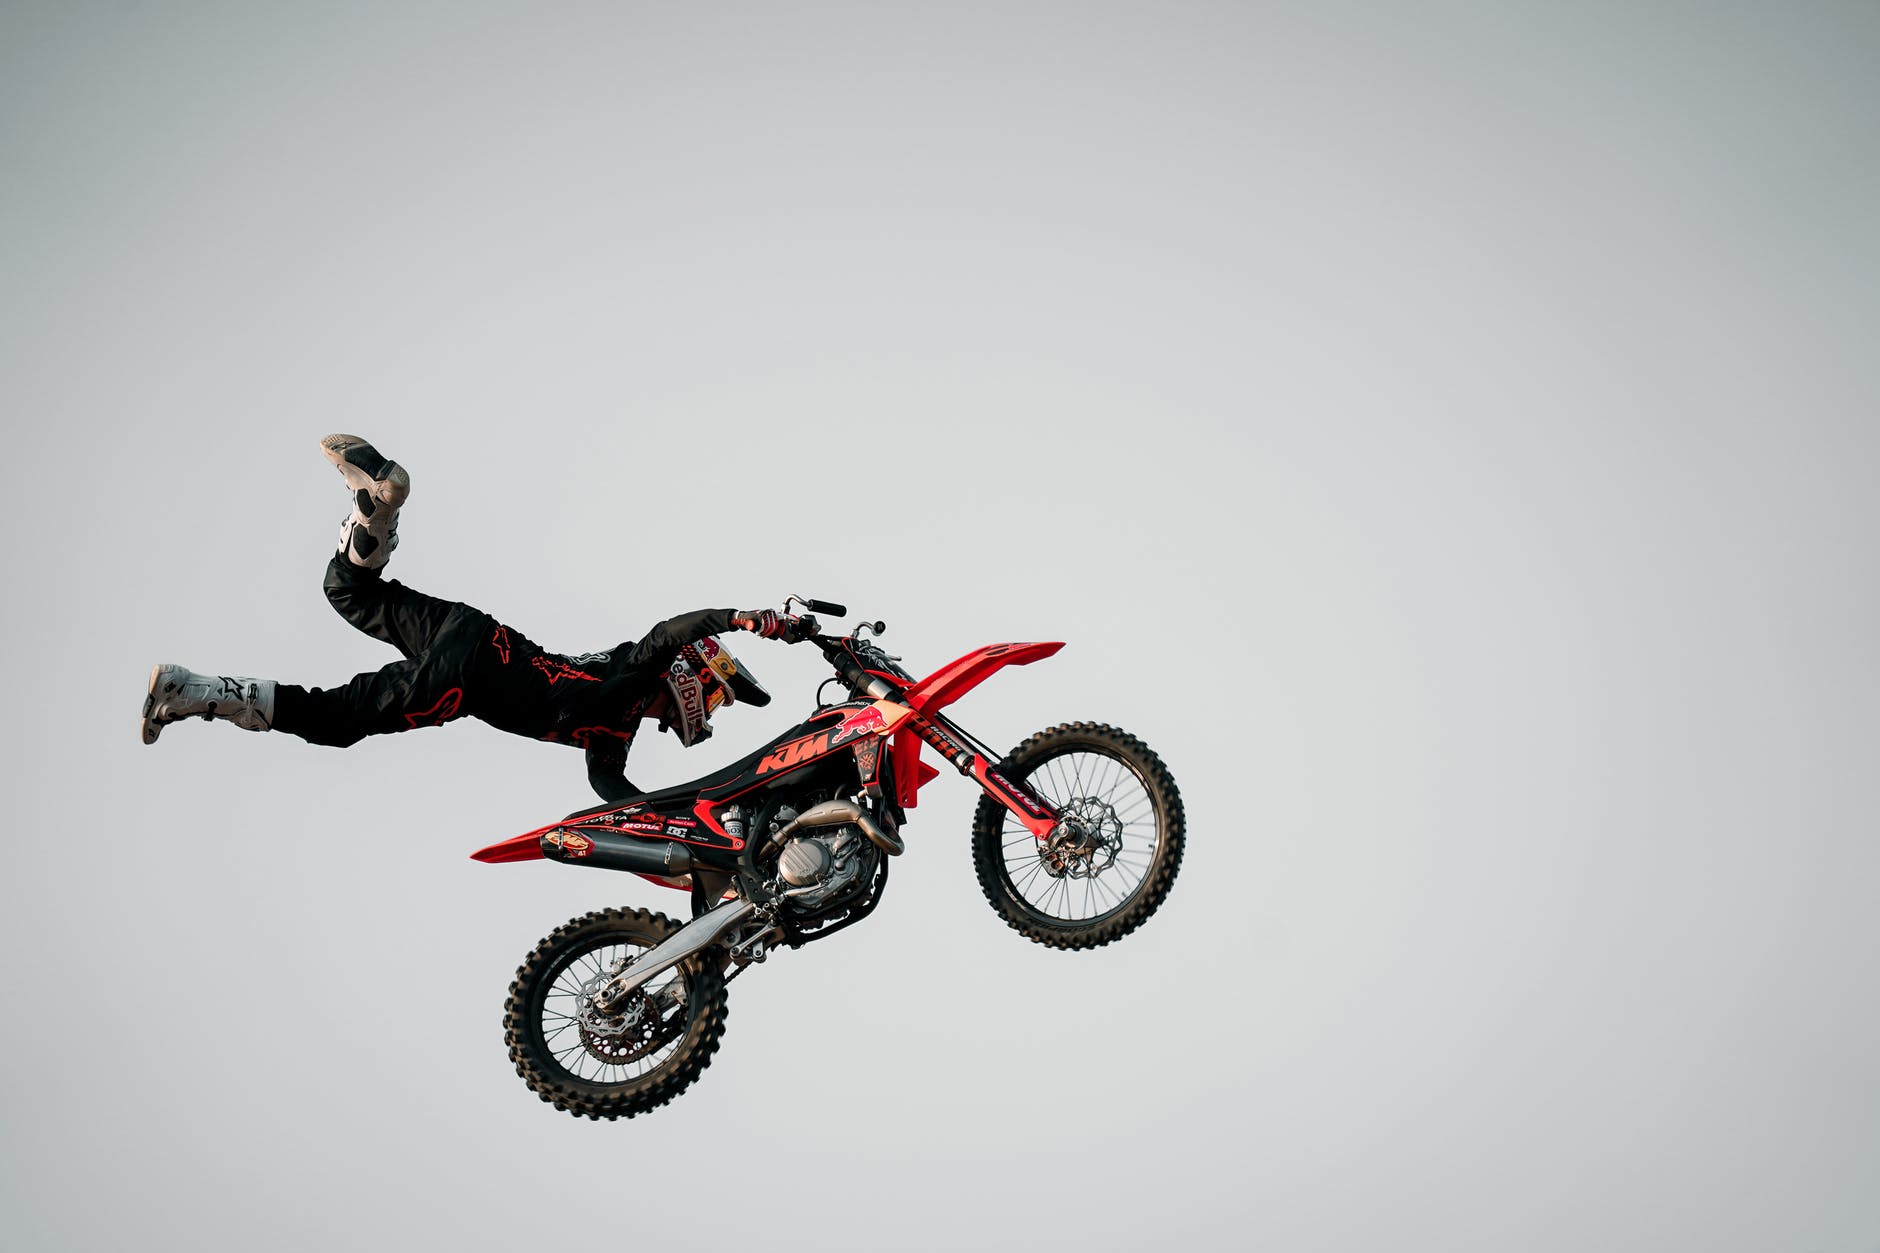 man performing stunt on motorcycle